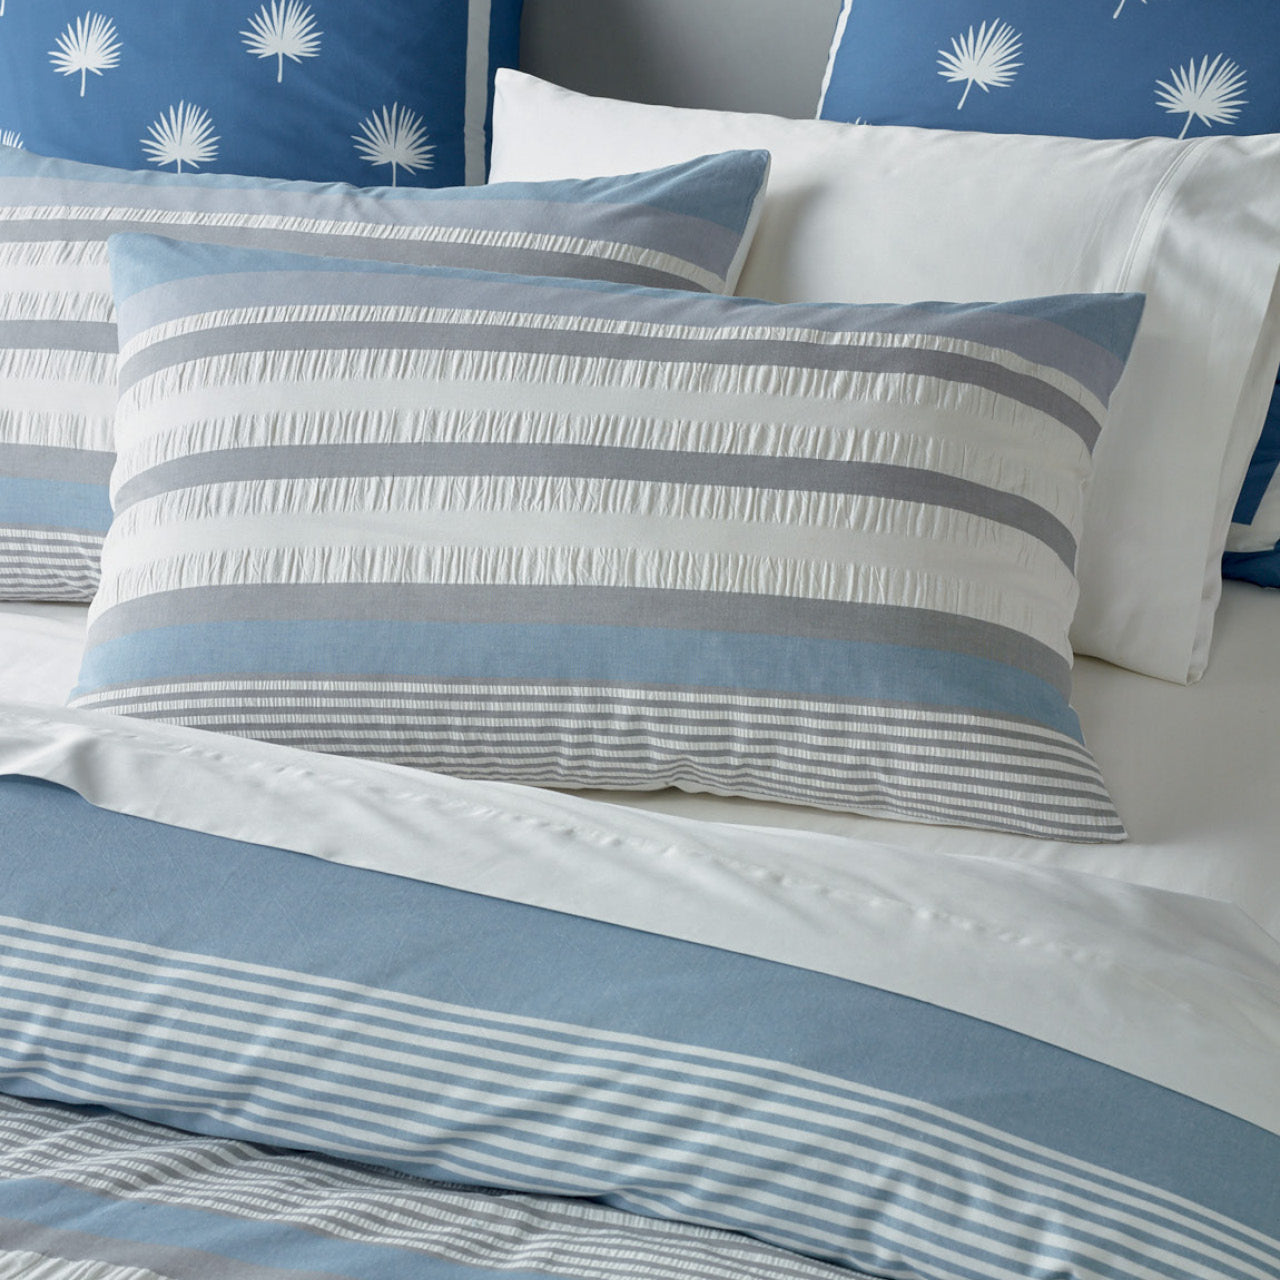 Close up shot of Hampton Pillowcases on bed